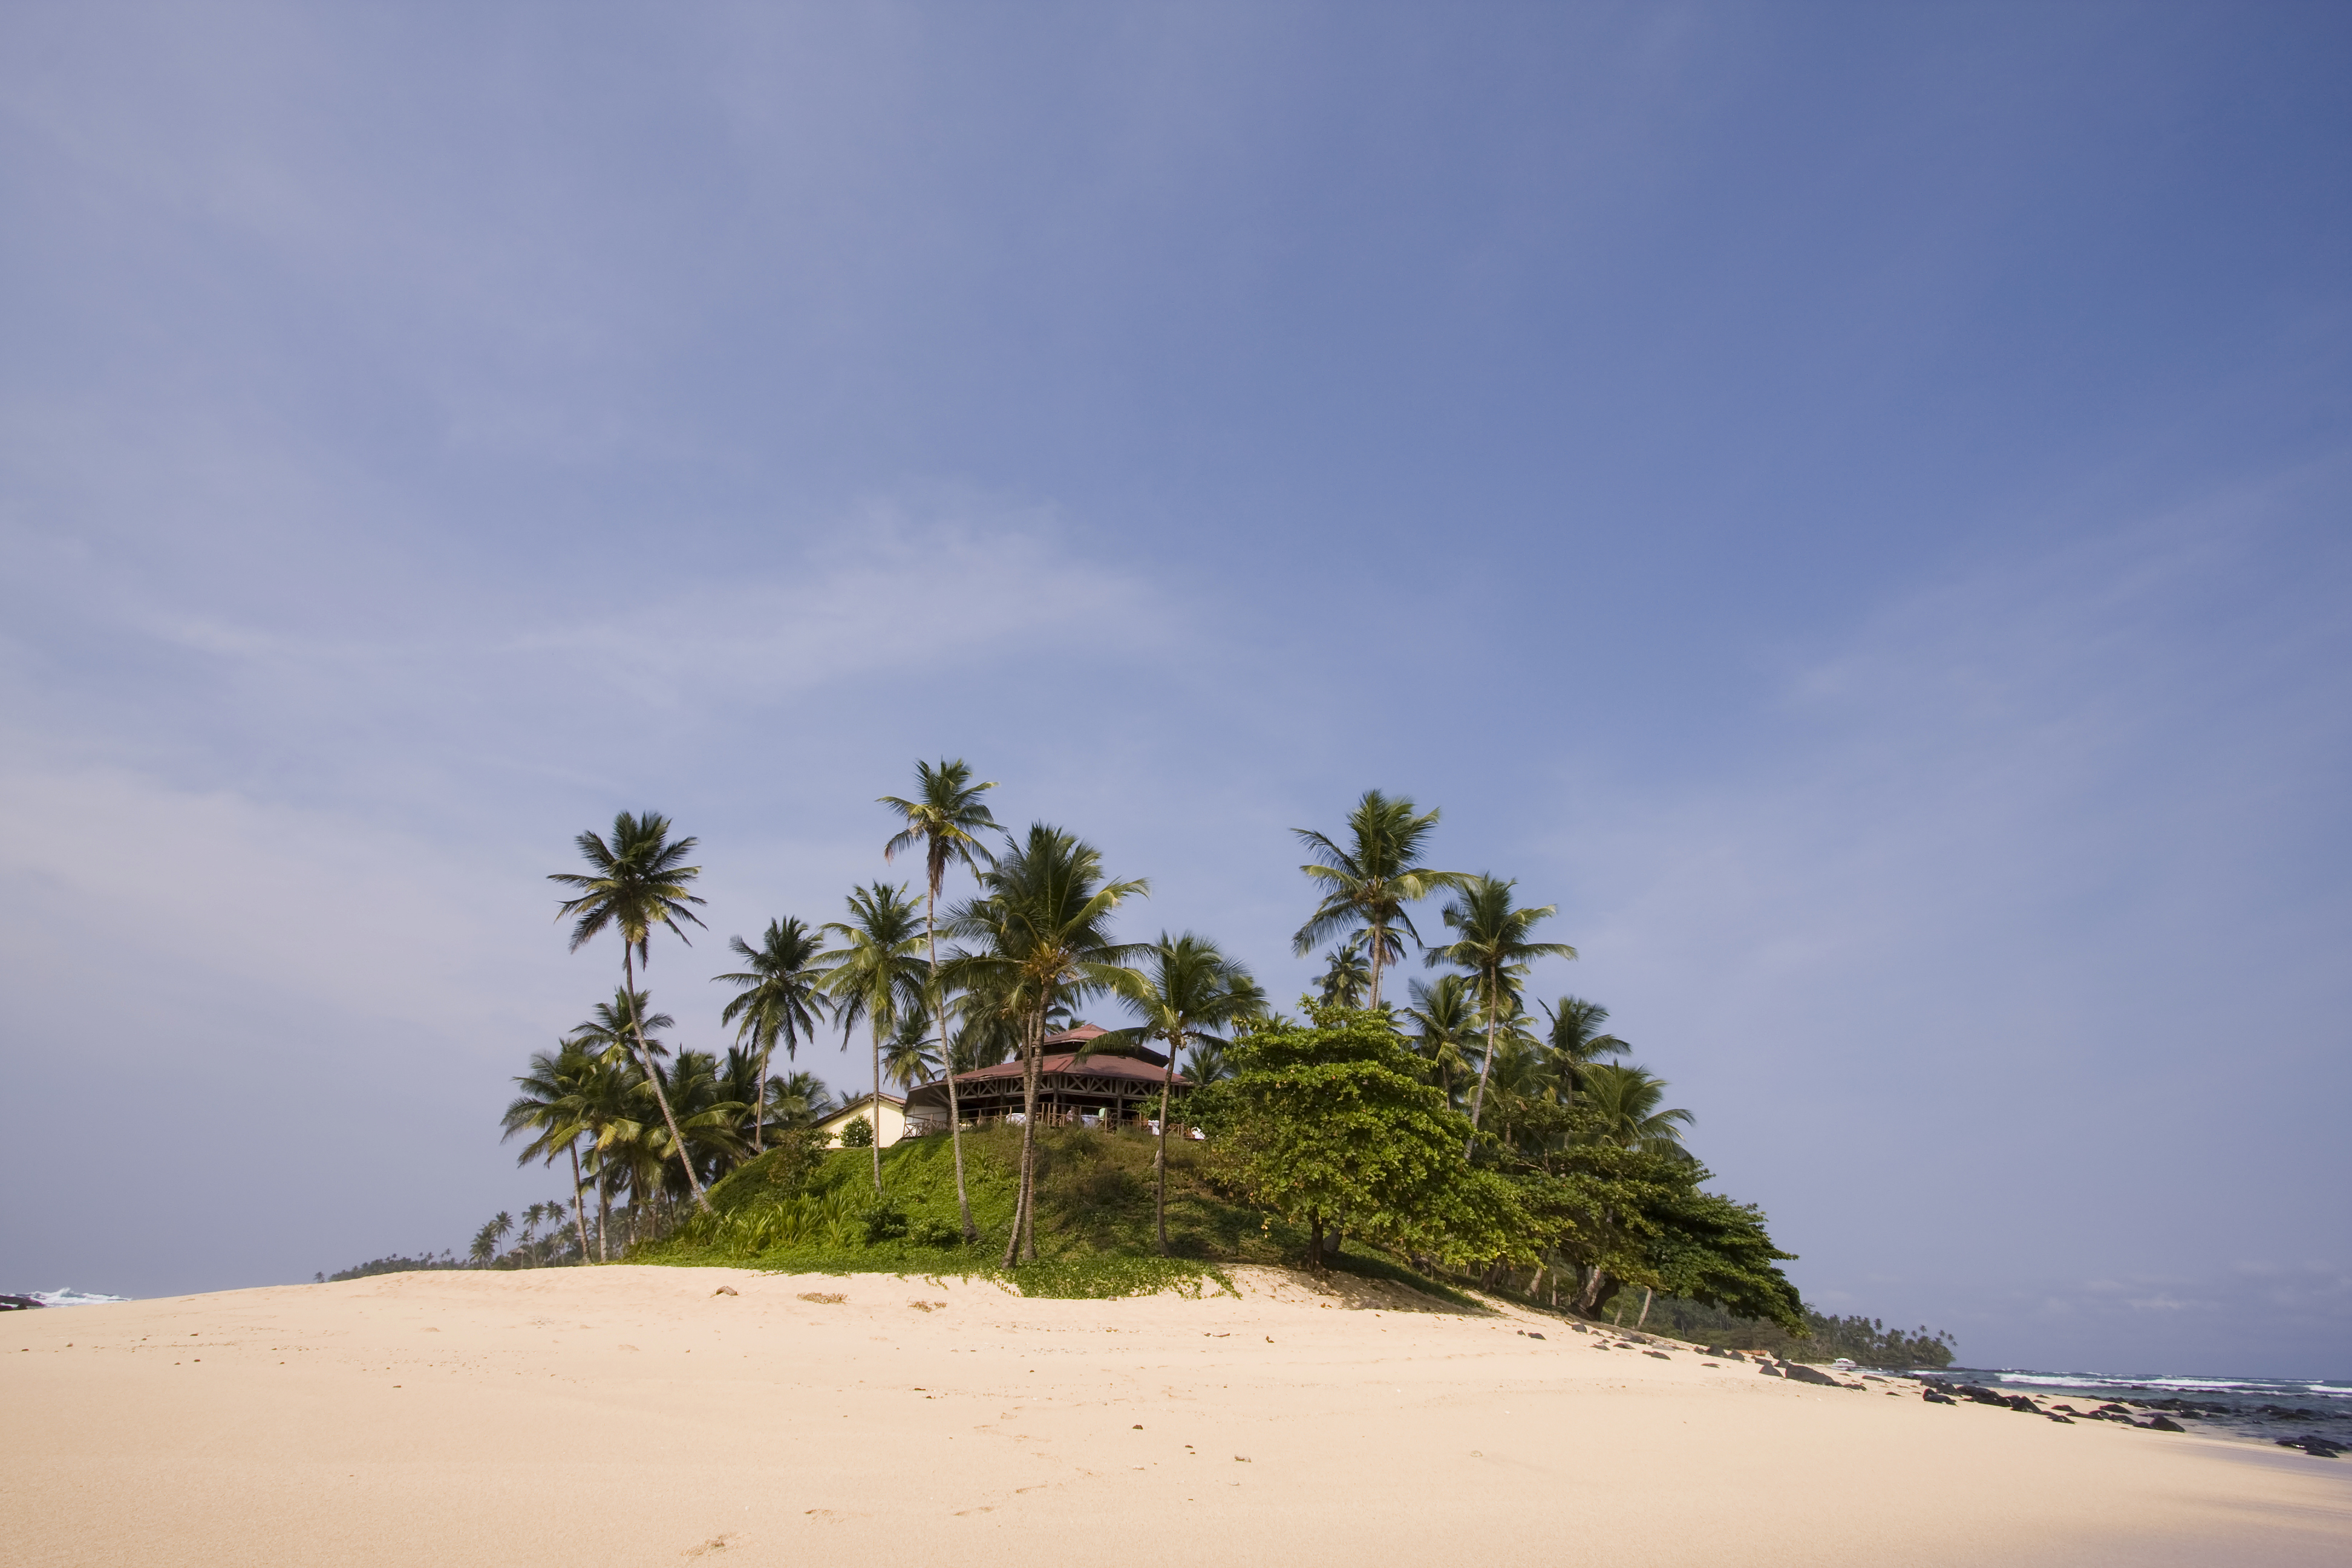 Relaxing oasis on the beaach, Sao Tome e Principe